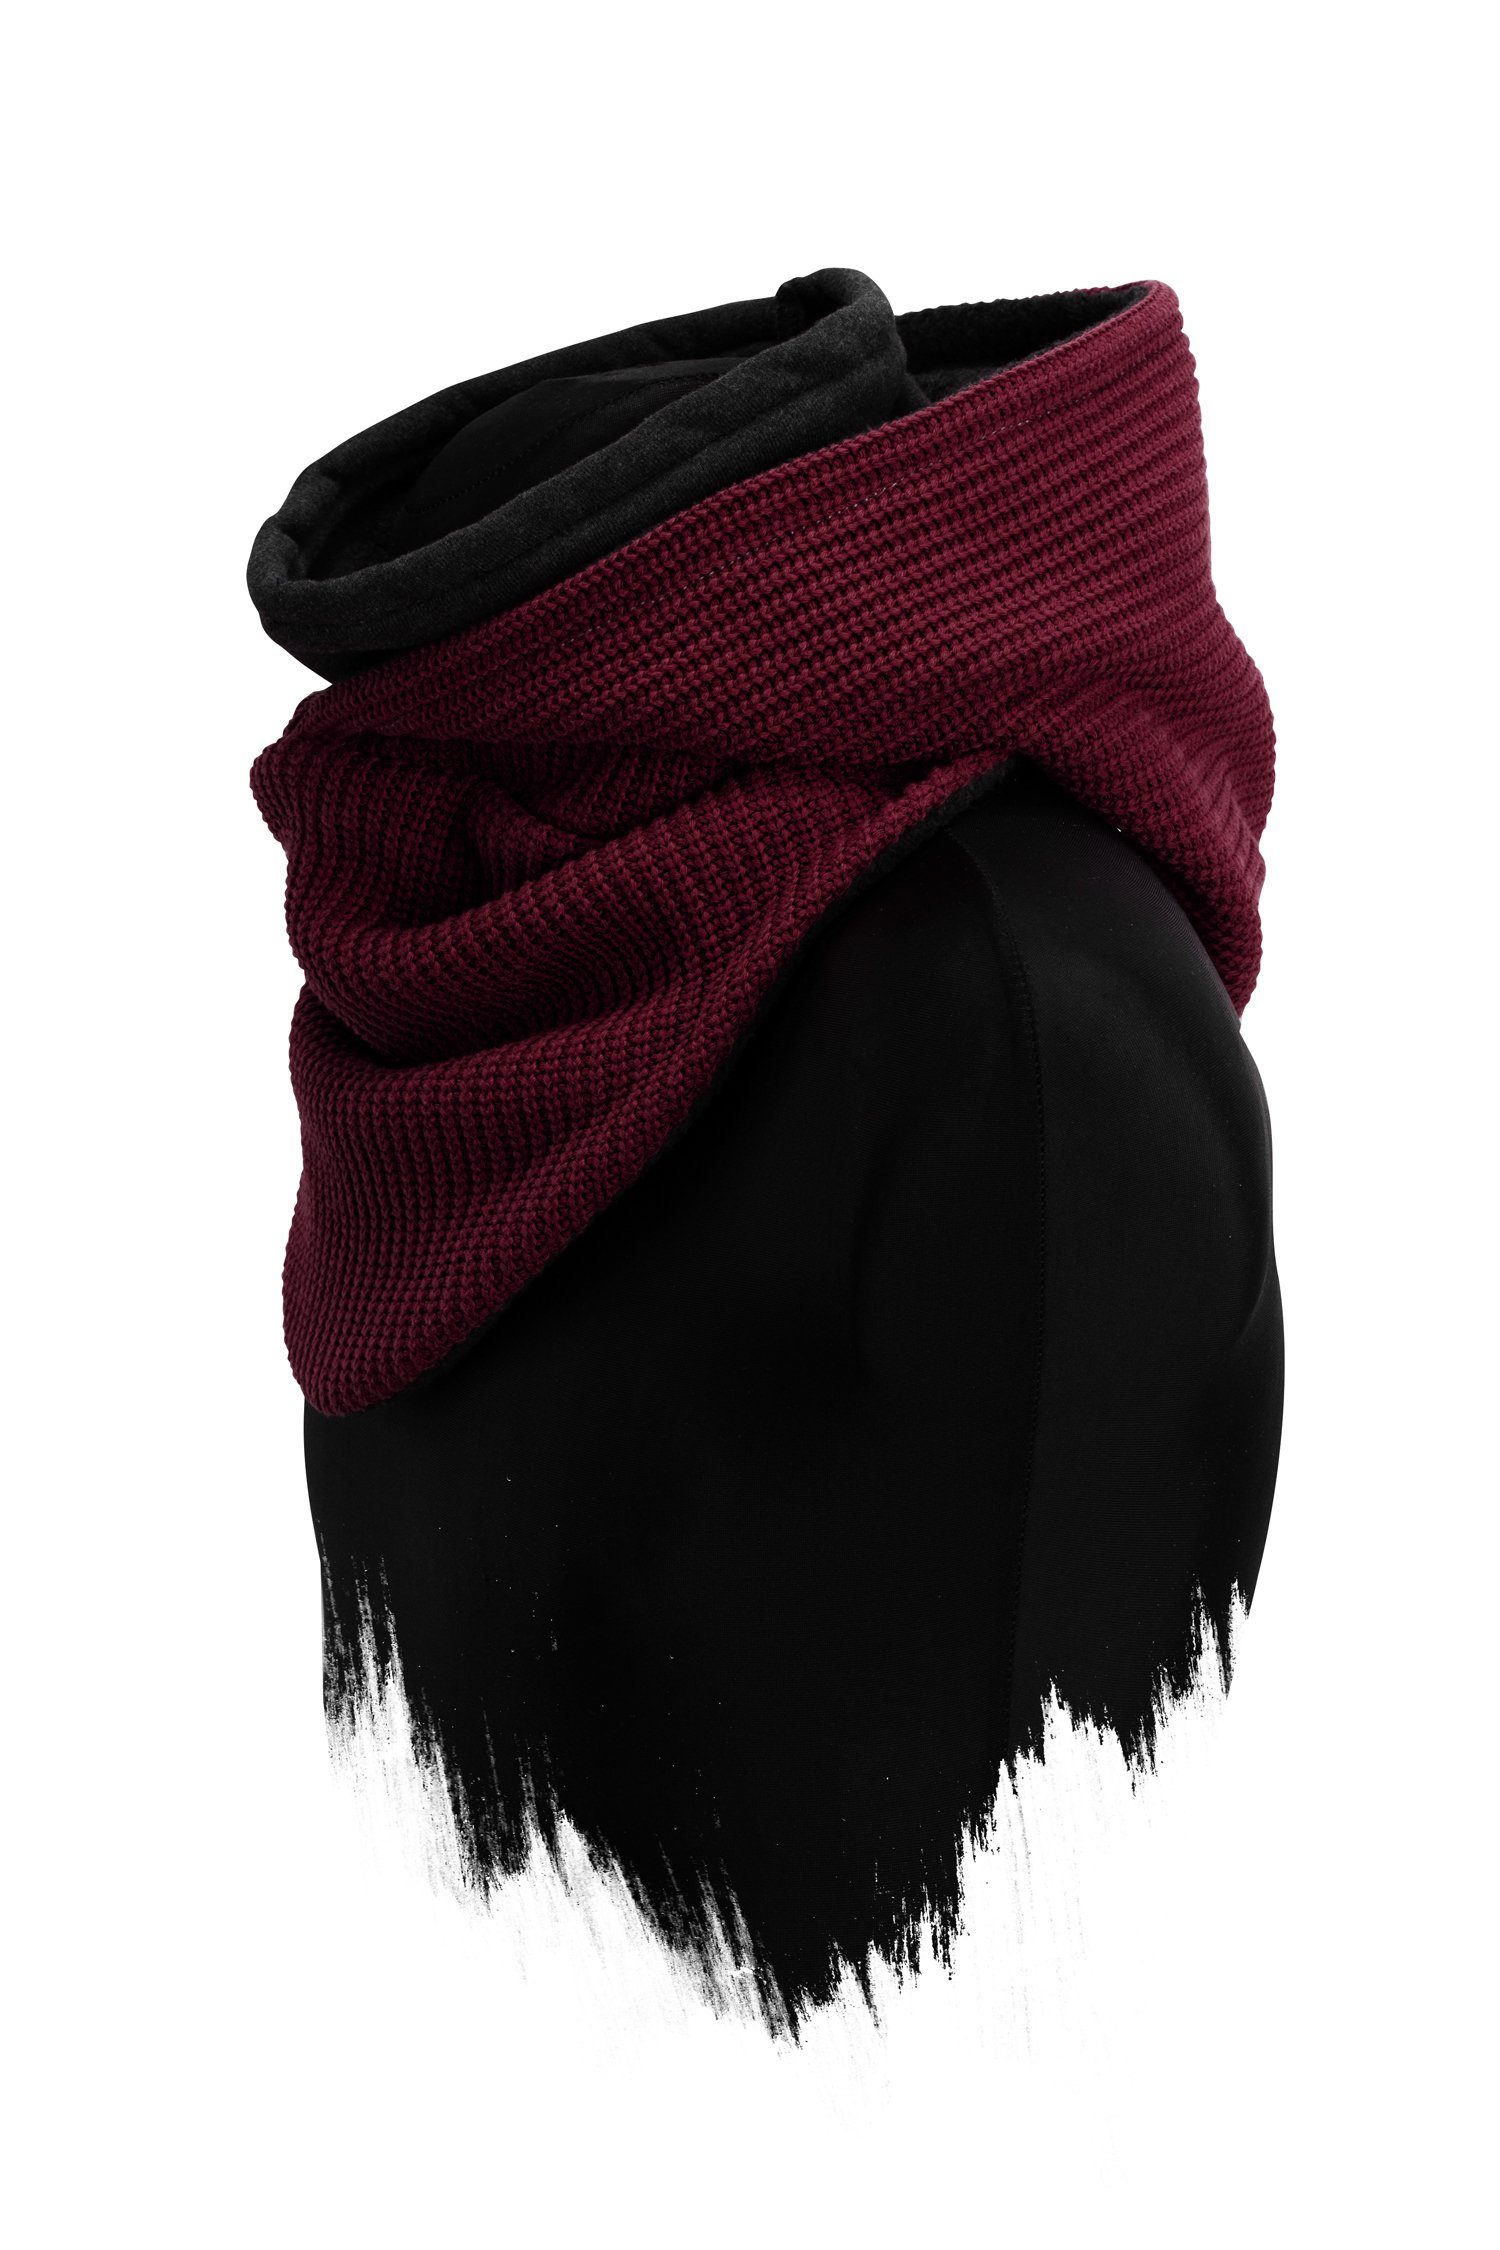 Strickschal, Windbreaker Knit integriertem Schal, Modeschal Manufaktur13 Bordeaux mit Kapuzenschal, Hooded Loop -